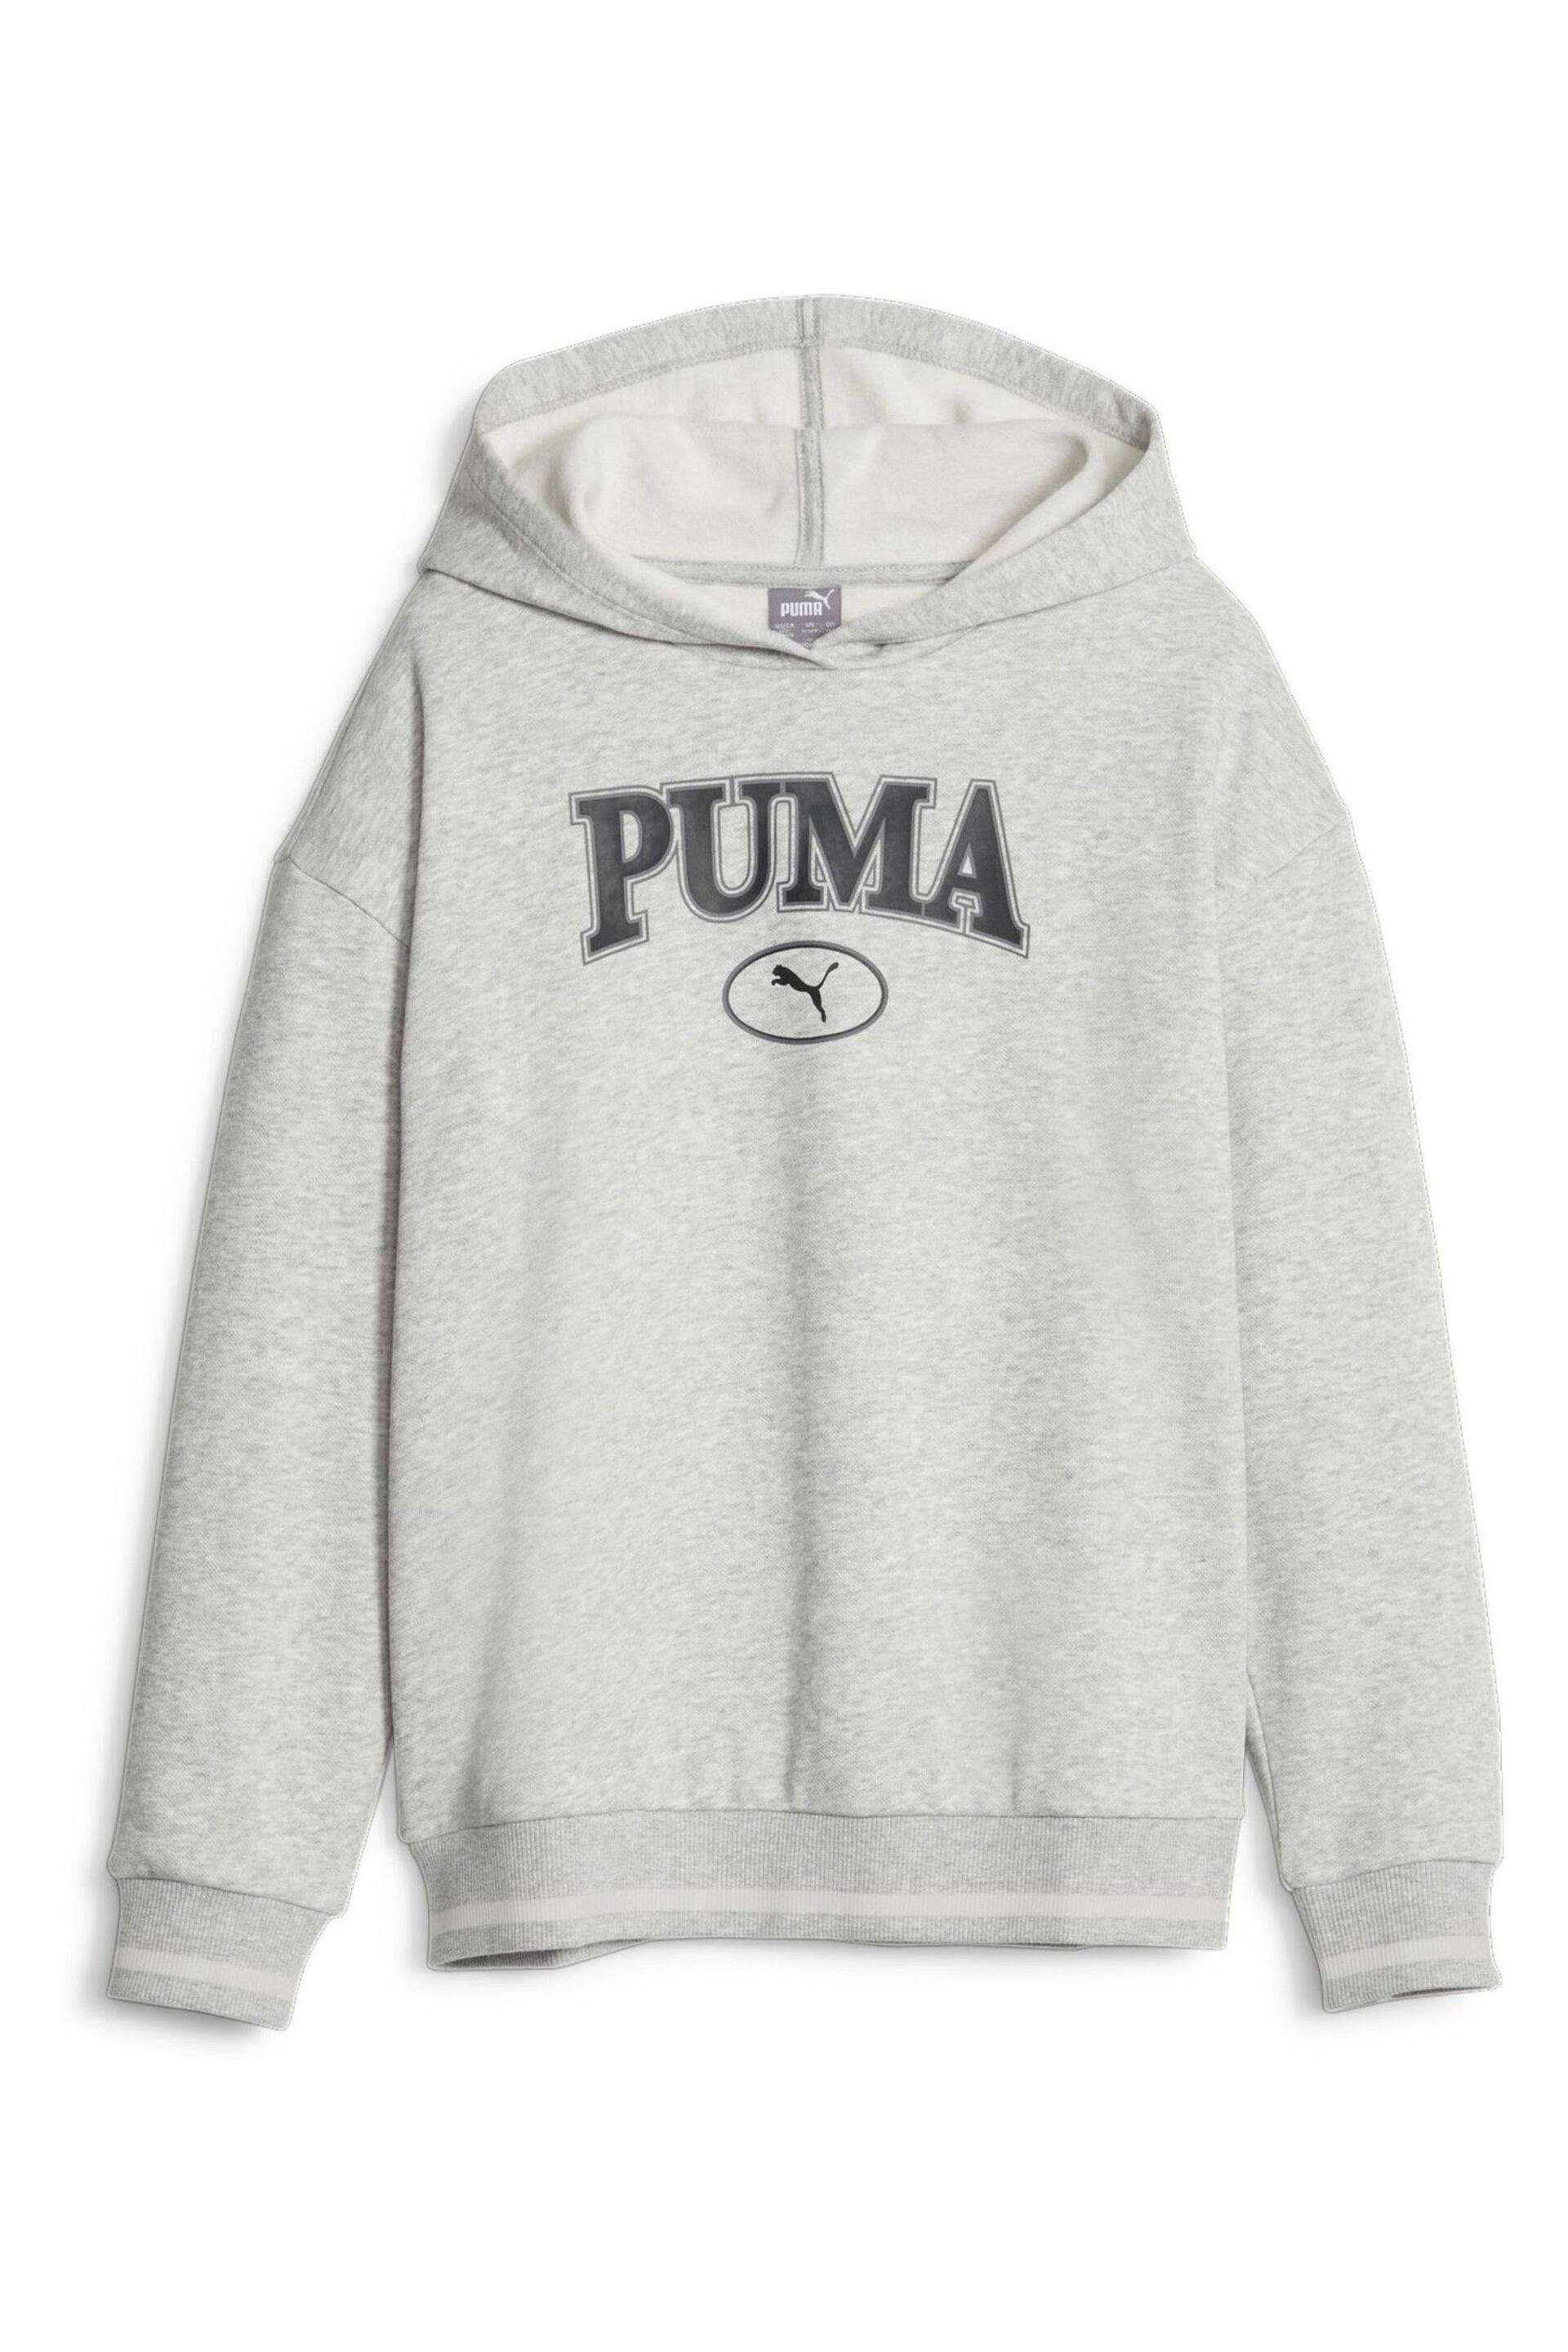 Puma Grey Youth Hoodie - Image 4 of 5